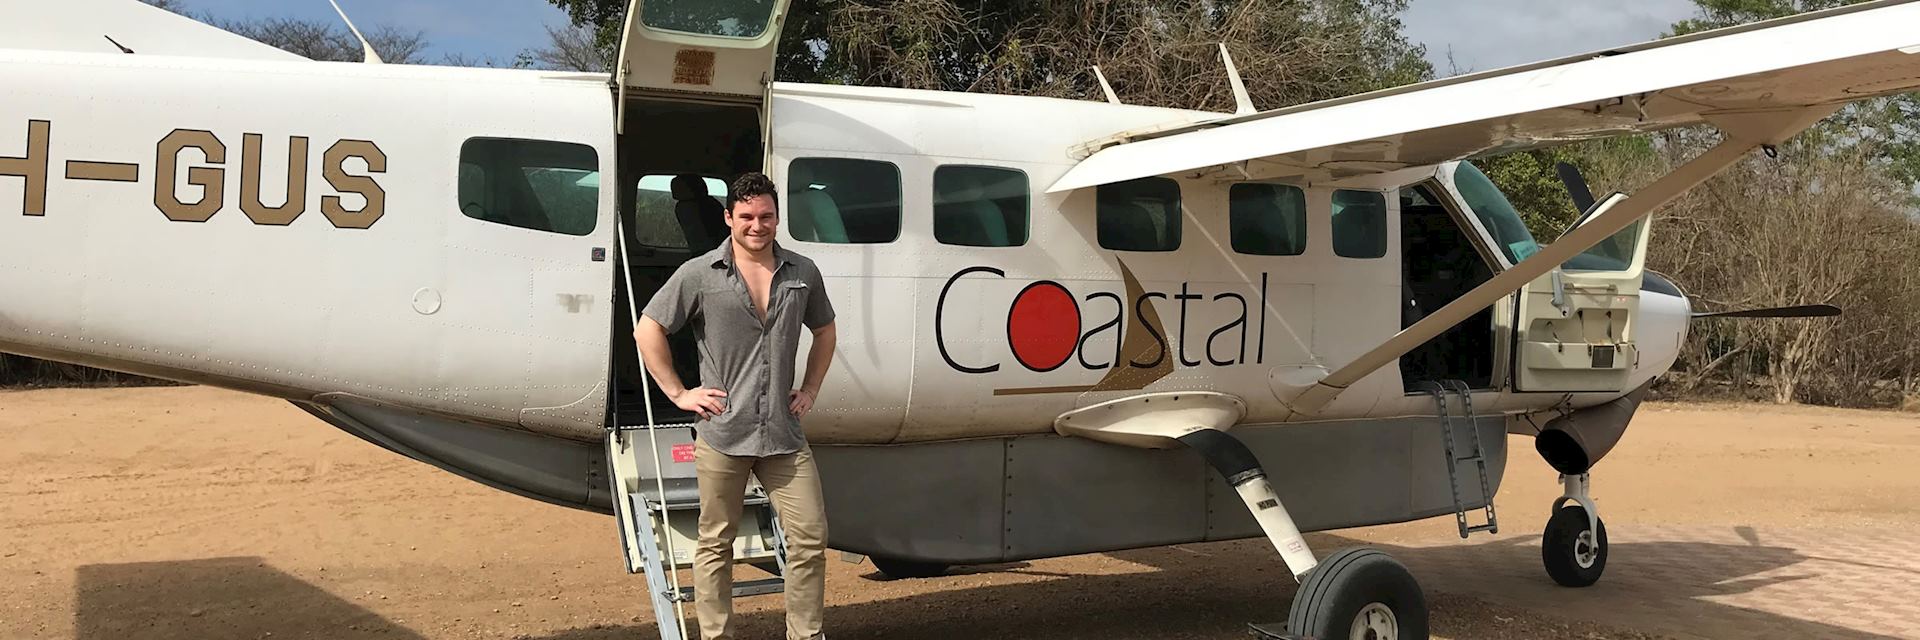 Tom preparing for an internal flight, Tanzania